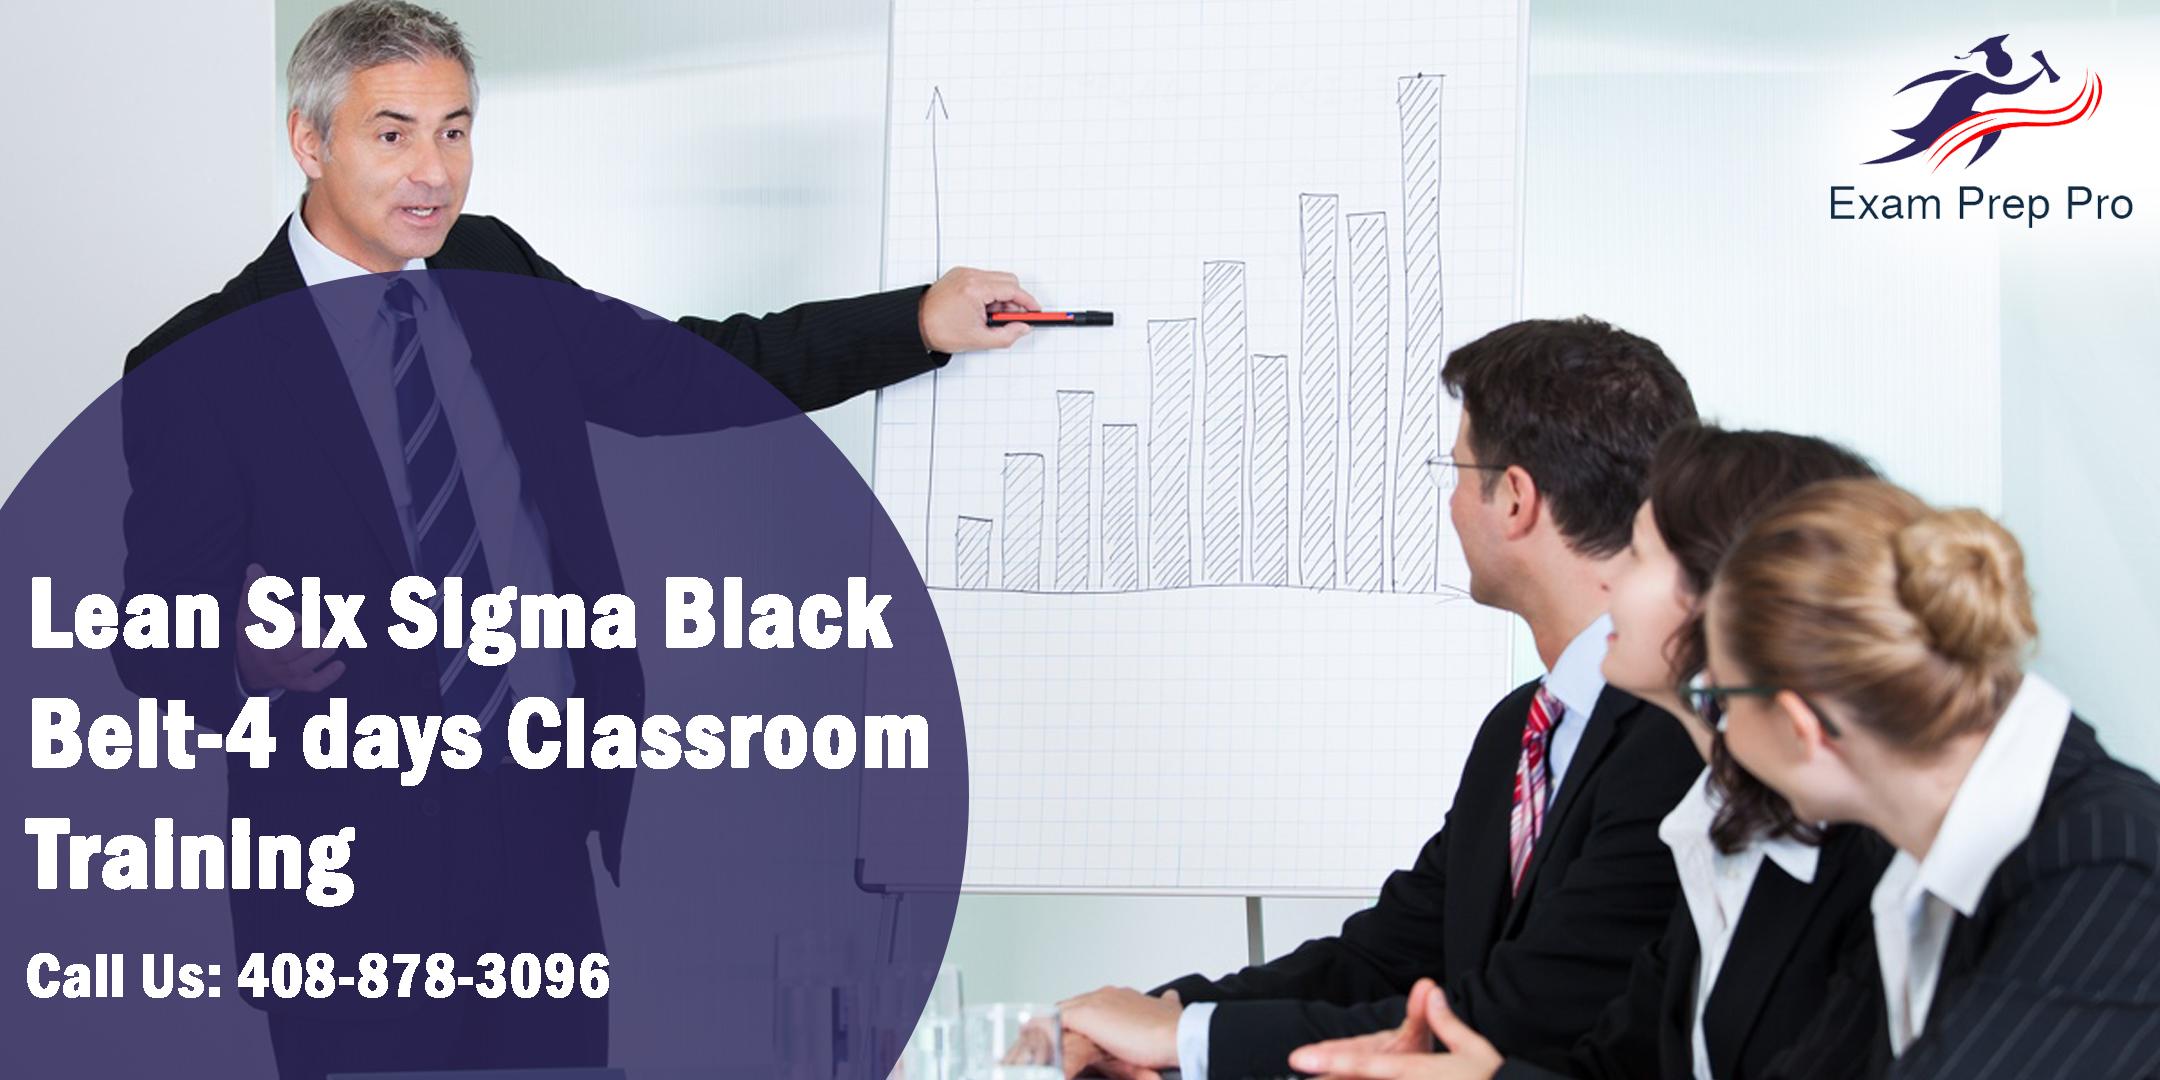 Lean Six Sigma Black Belt-4 days Classroom Training in Reno, NV